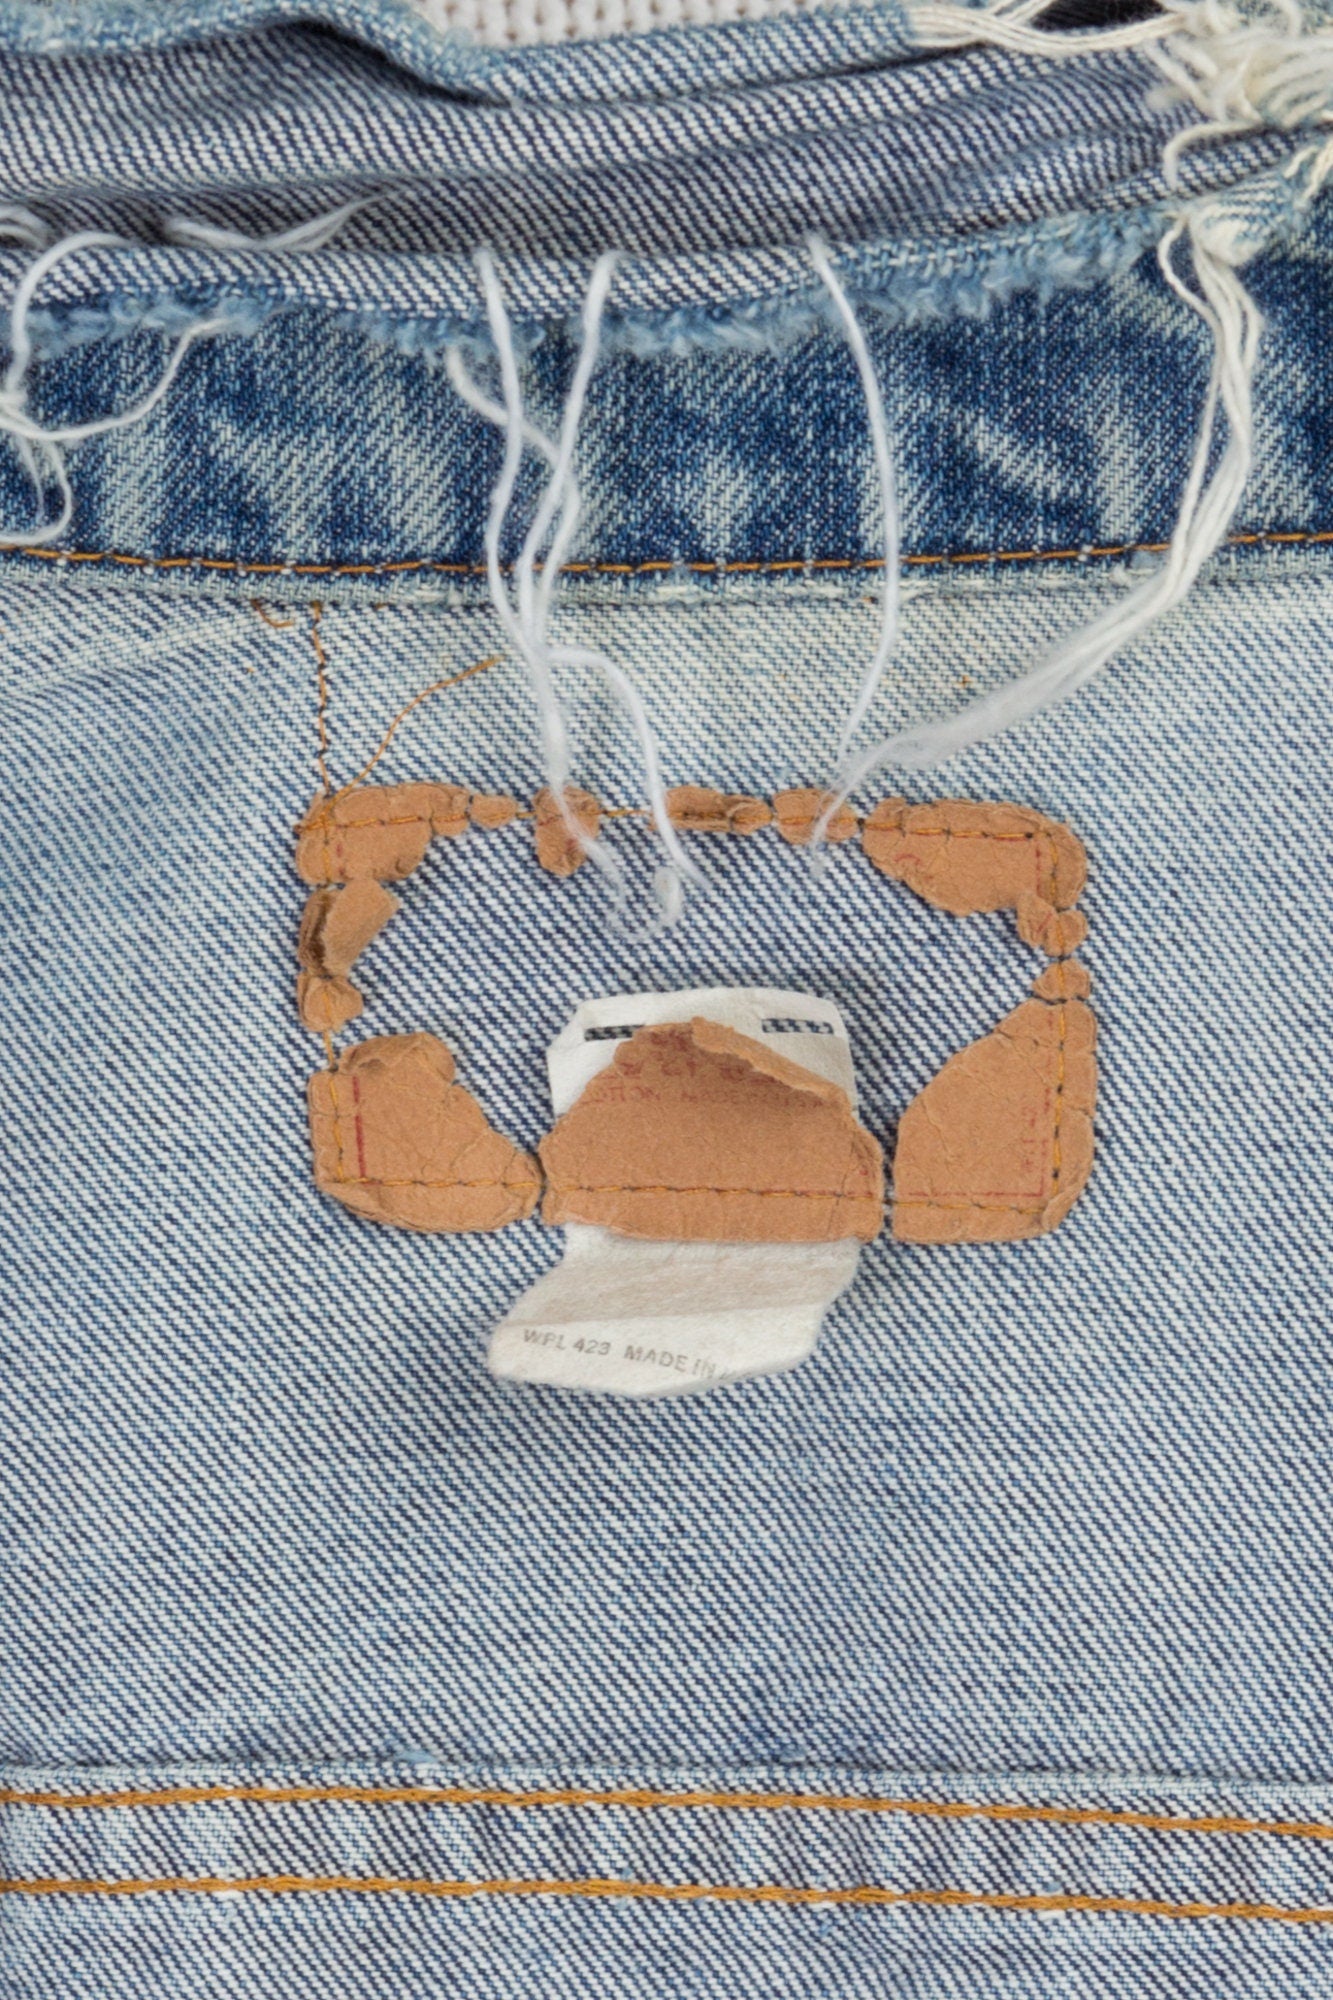 70s Levi's Two-Pocket Jean Jacket - Men's Small, Women's Medium 